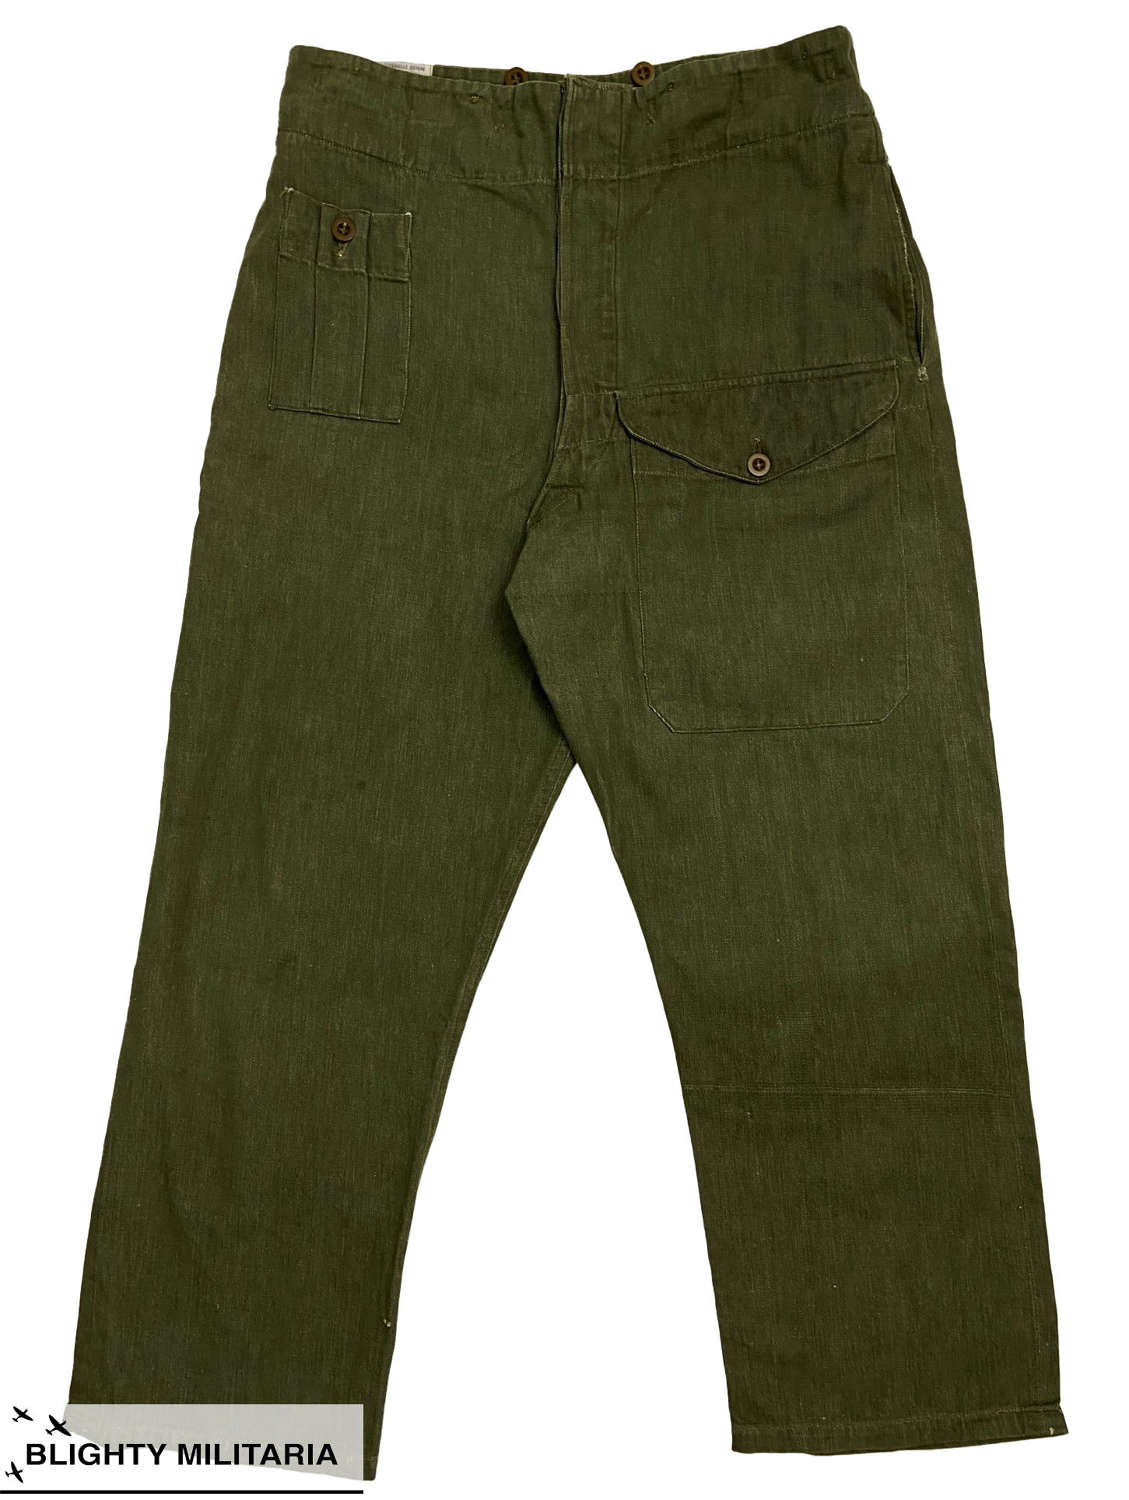 Original 1954 Dated British Denim Battledress Trousers - Size 5